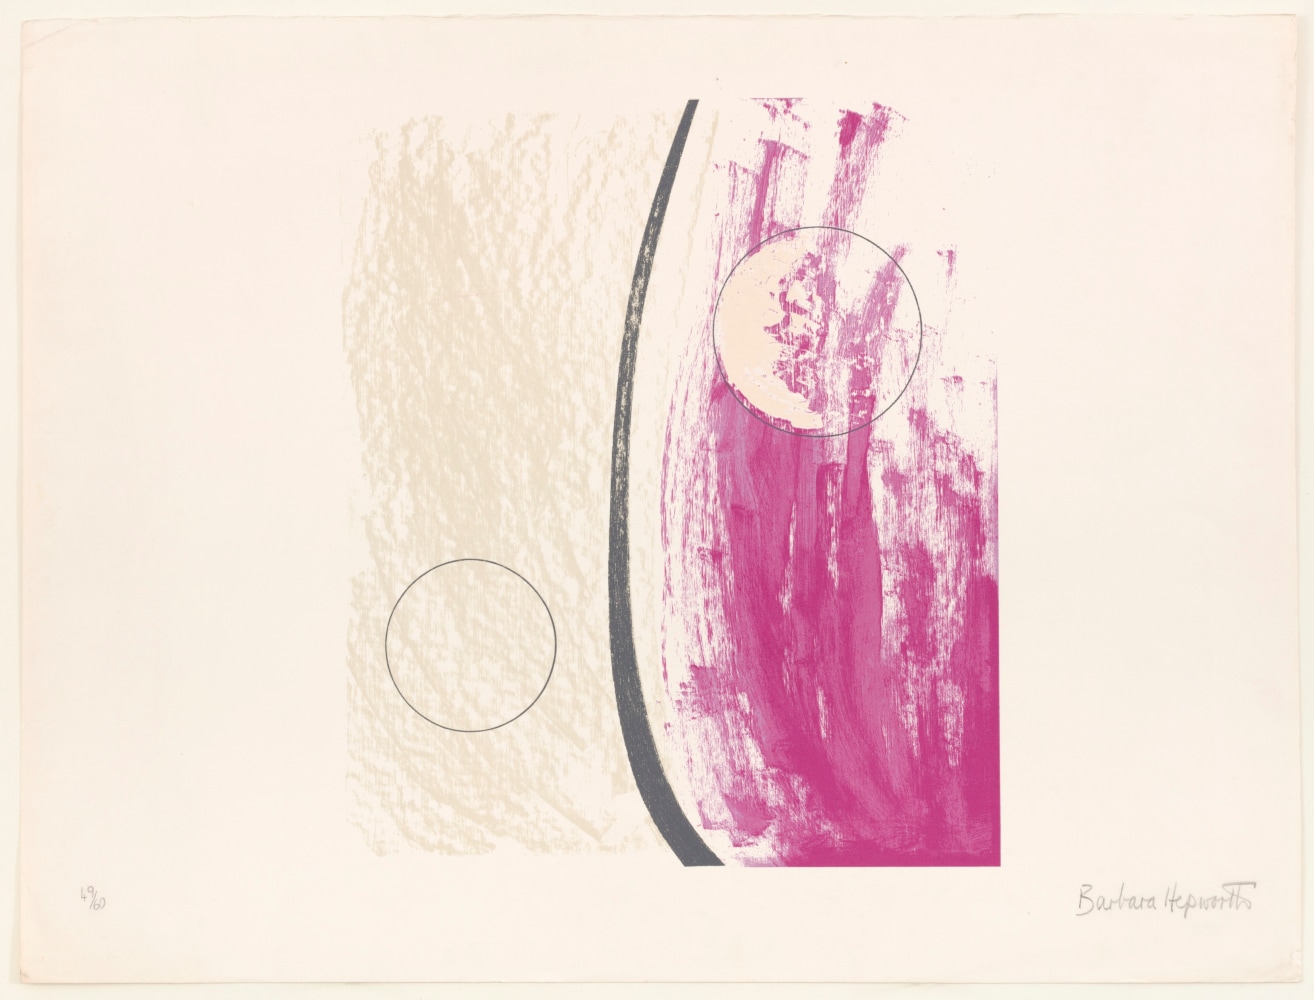 Barbara Hepworth

Orchid, 1970

screenprint, ed. of 60

22 7/8 x 30 3/4 in. / 58.1 x 78.1 cm